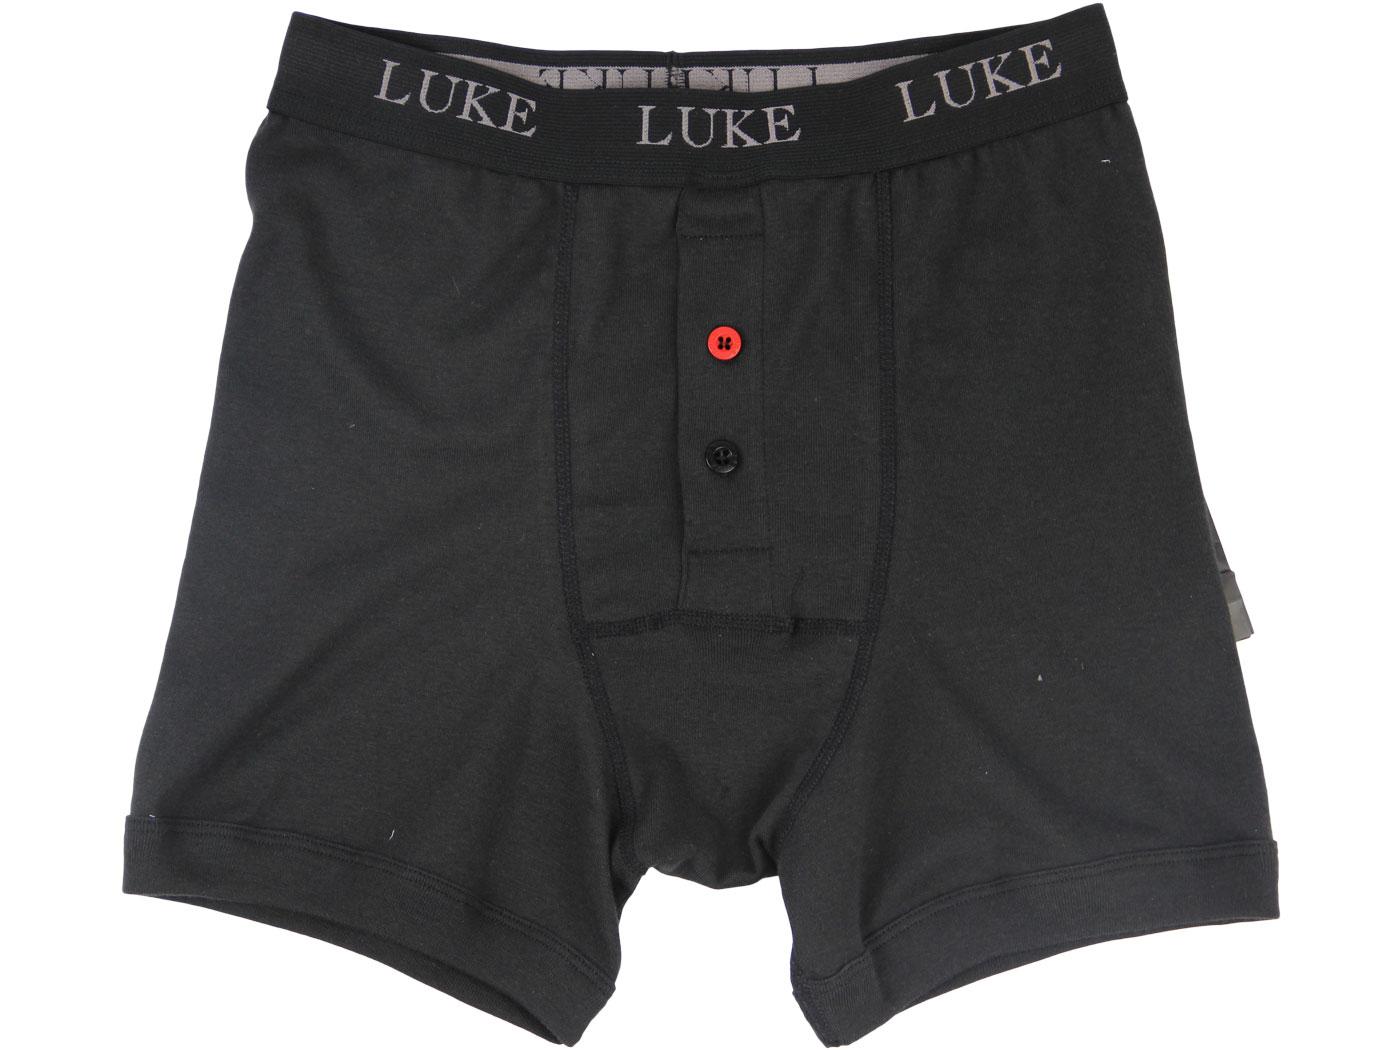 + Bruno LUKE 1977 Mens Boxer Shorts (BLACK)